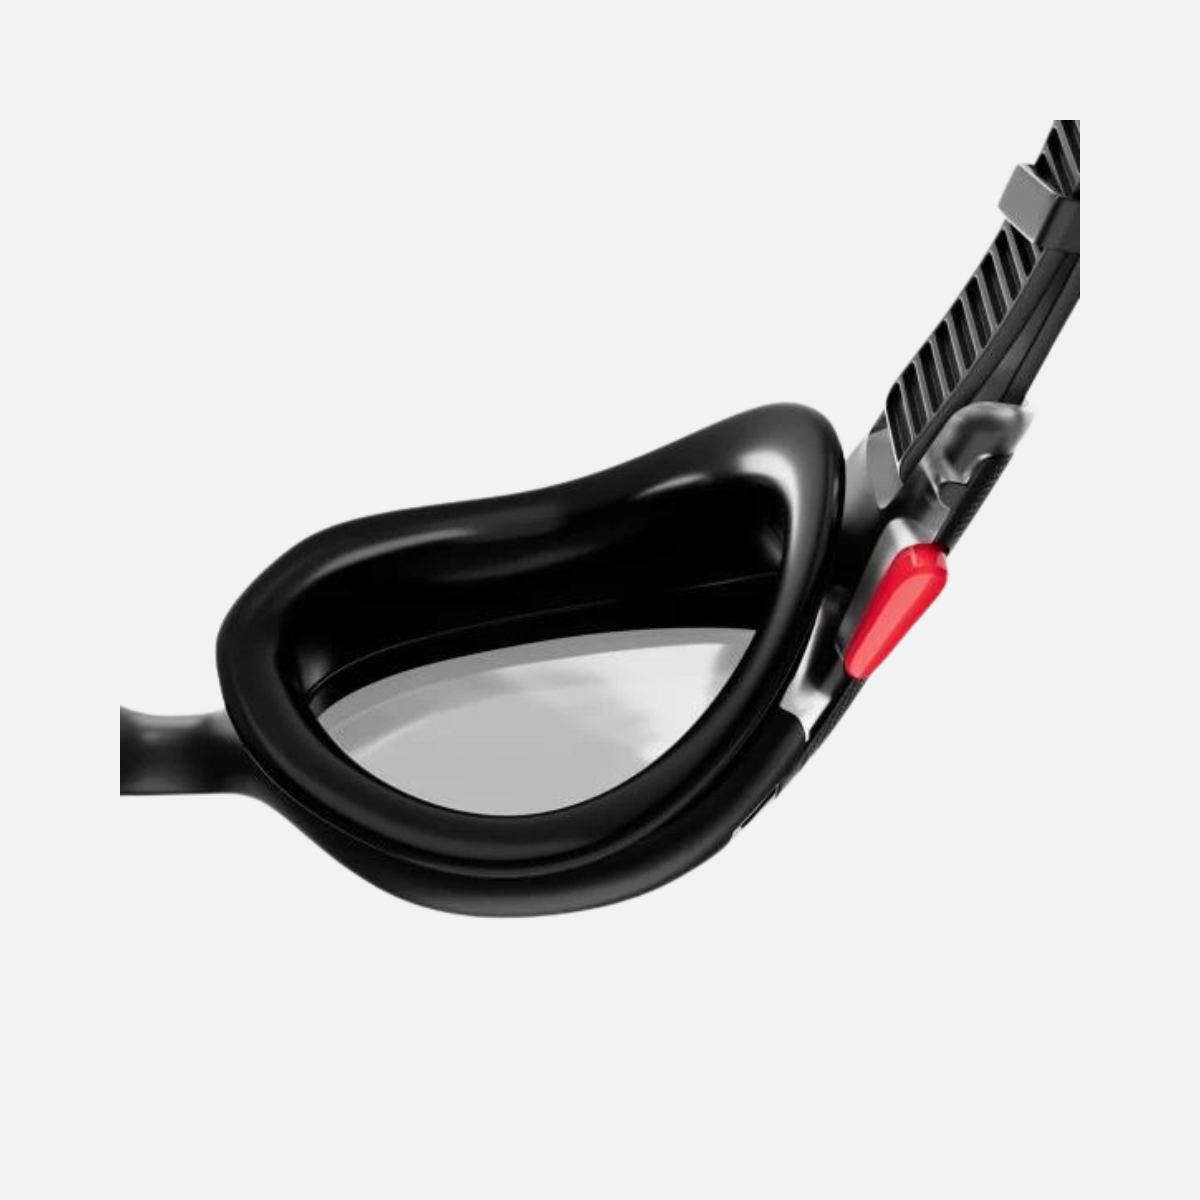 Speedo Biofuse 2.0 Goggles -Clear-Red/Smoke-White/Smoke-Black